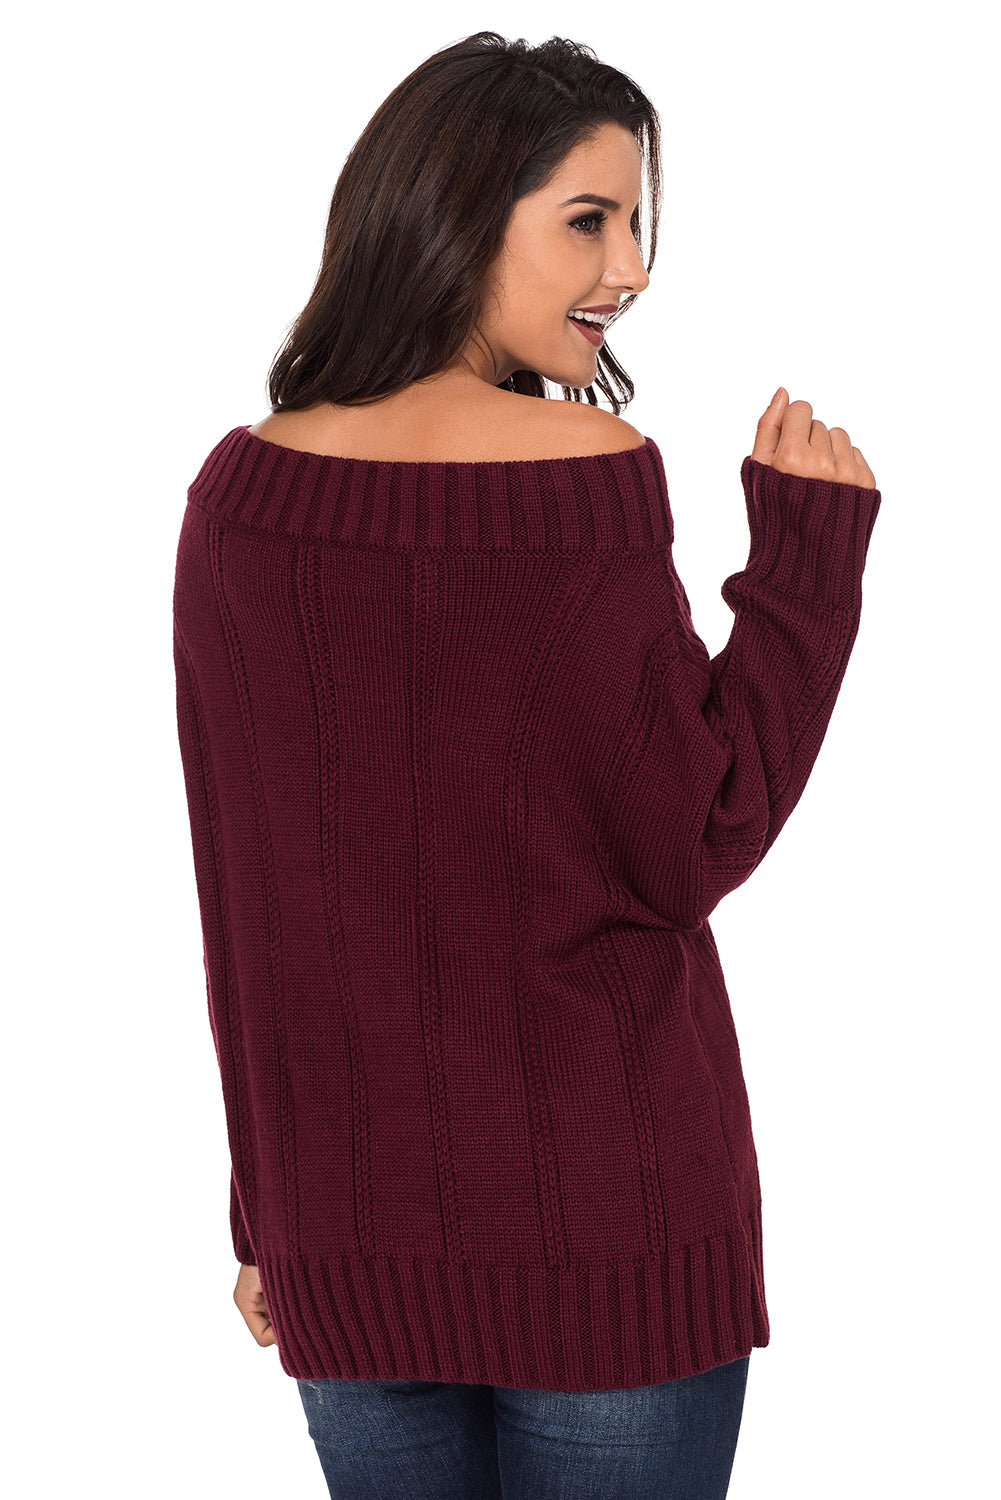 Burgundy Off The Shoulder Winter Sweater